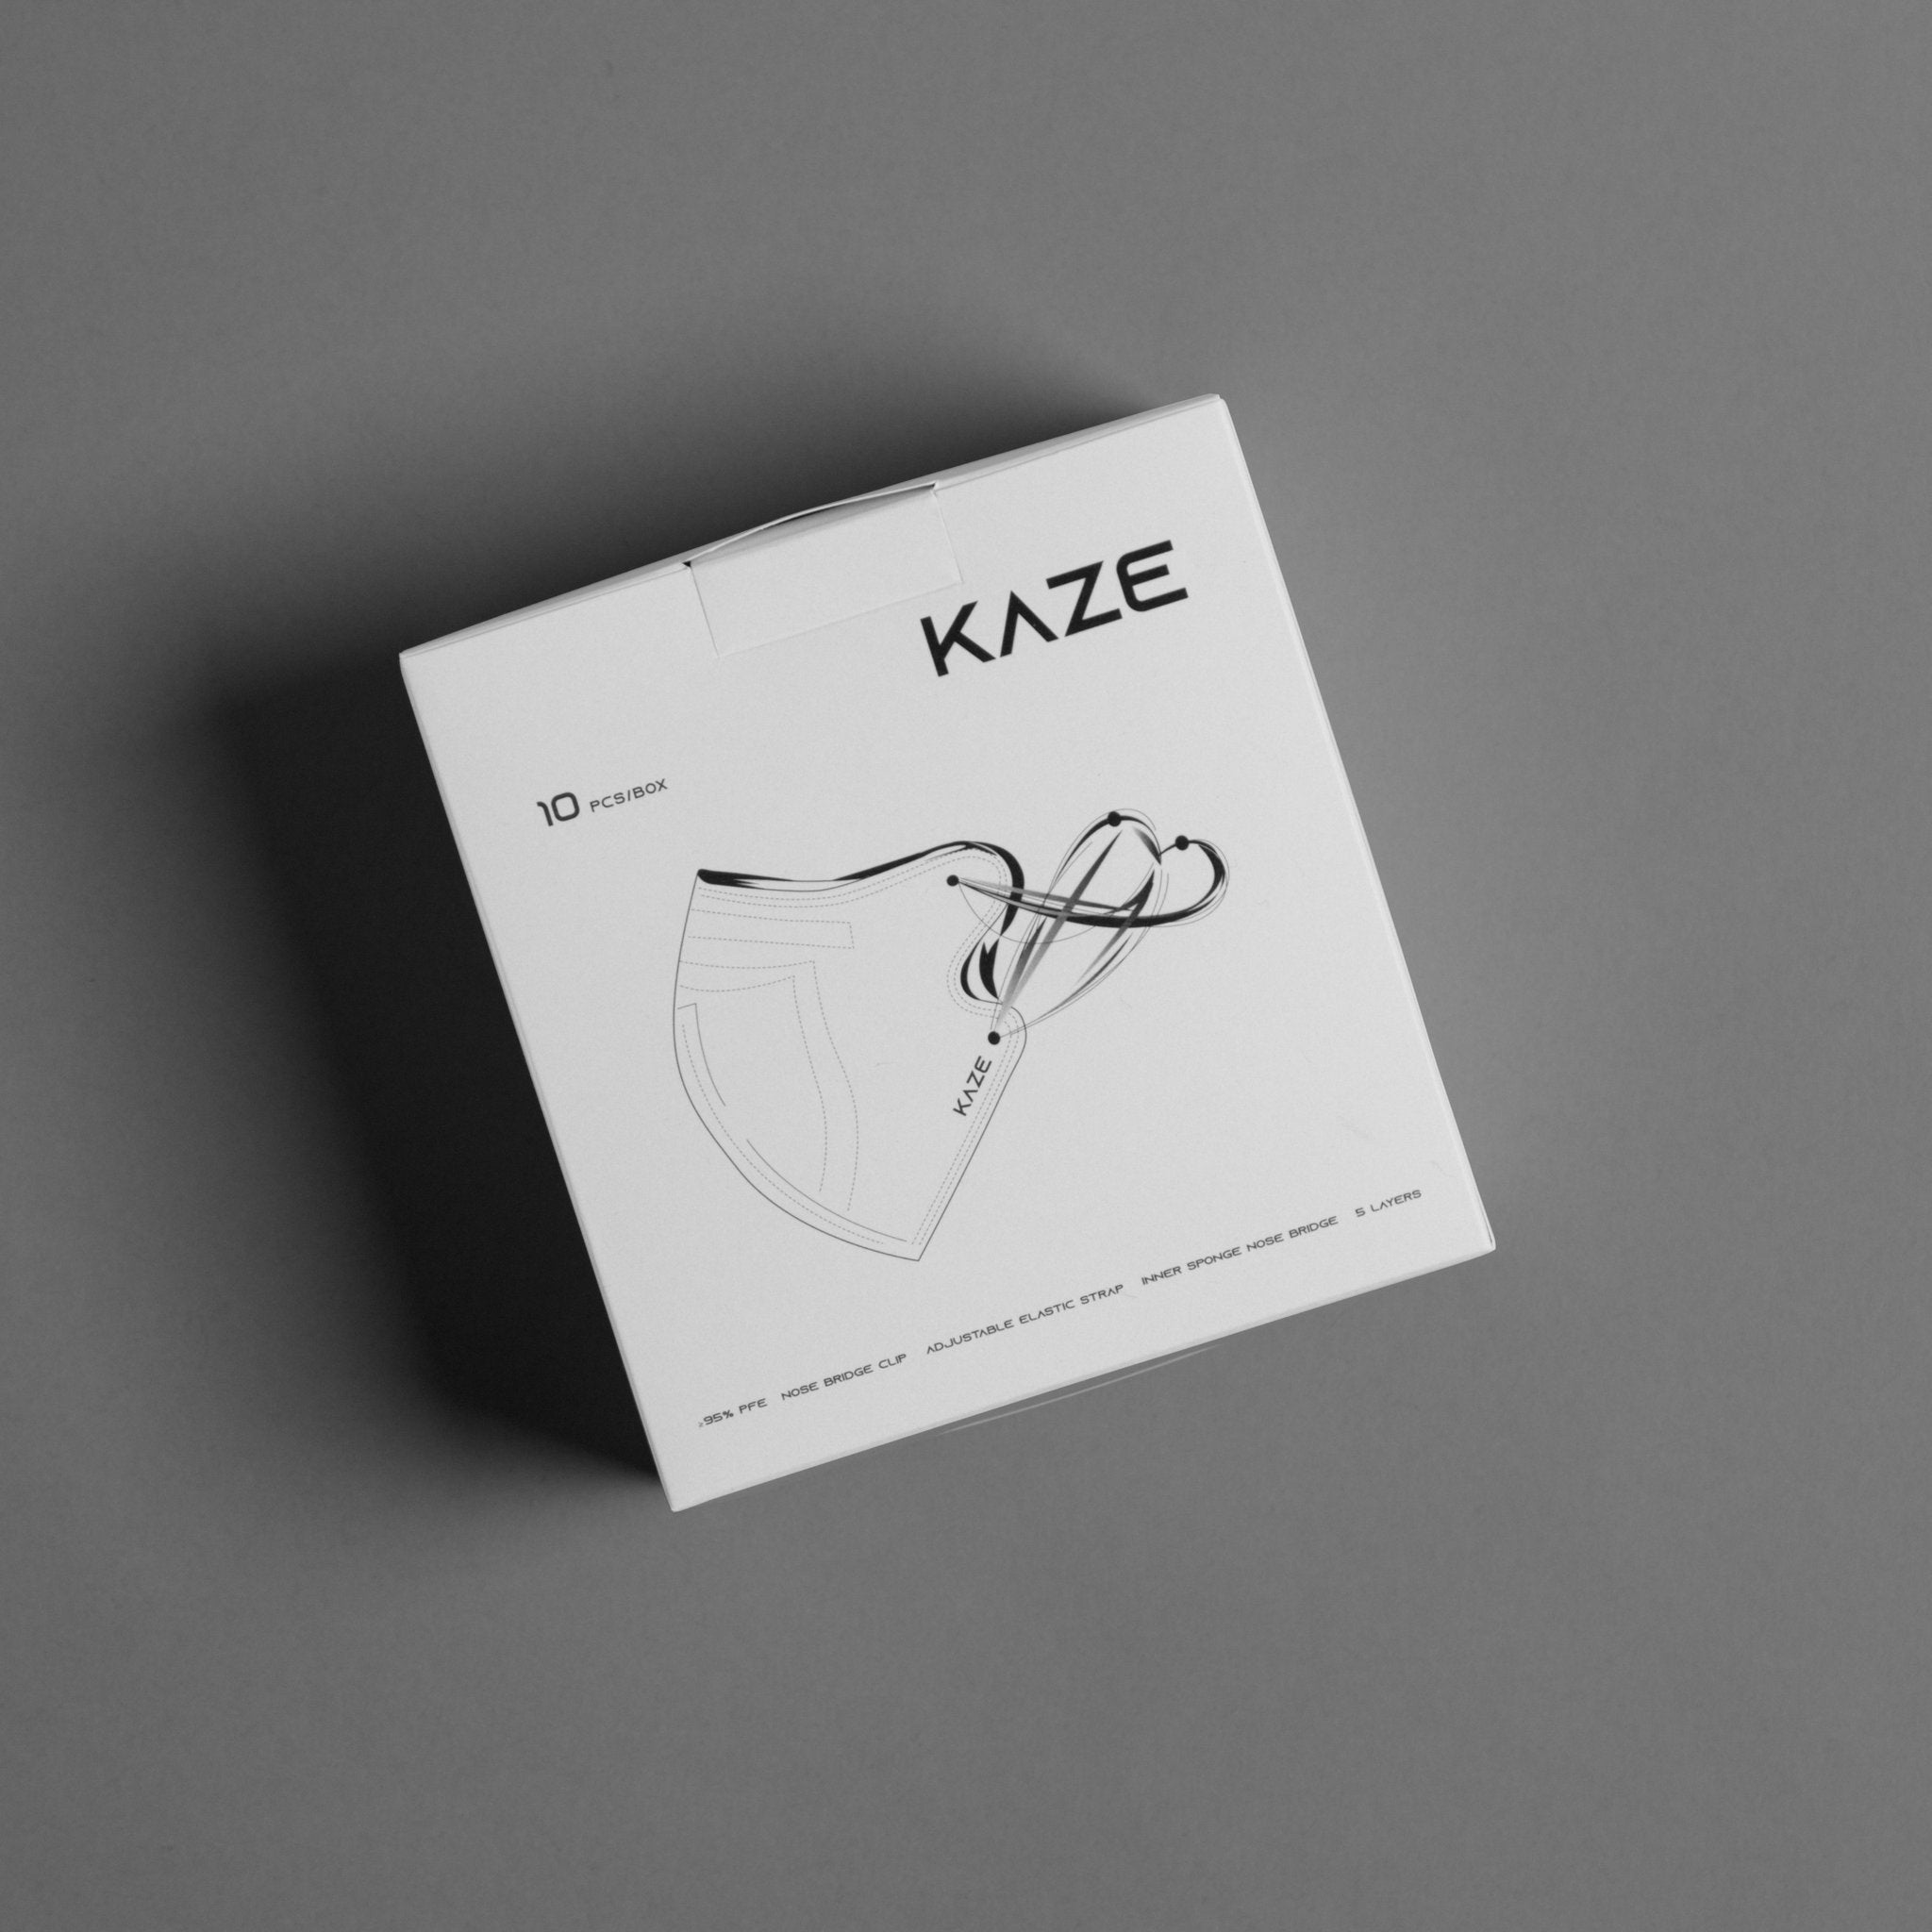 KAZE Masks - Junior White Series